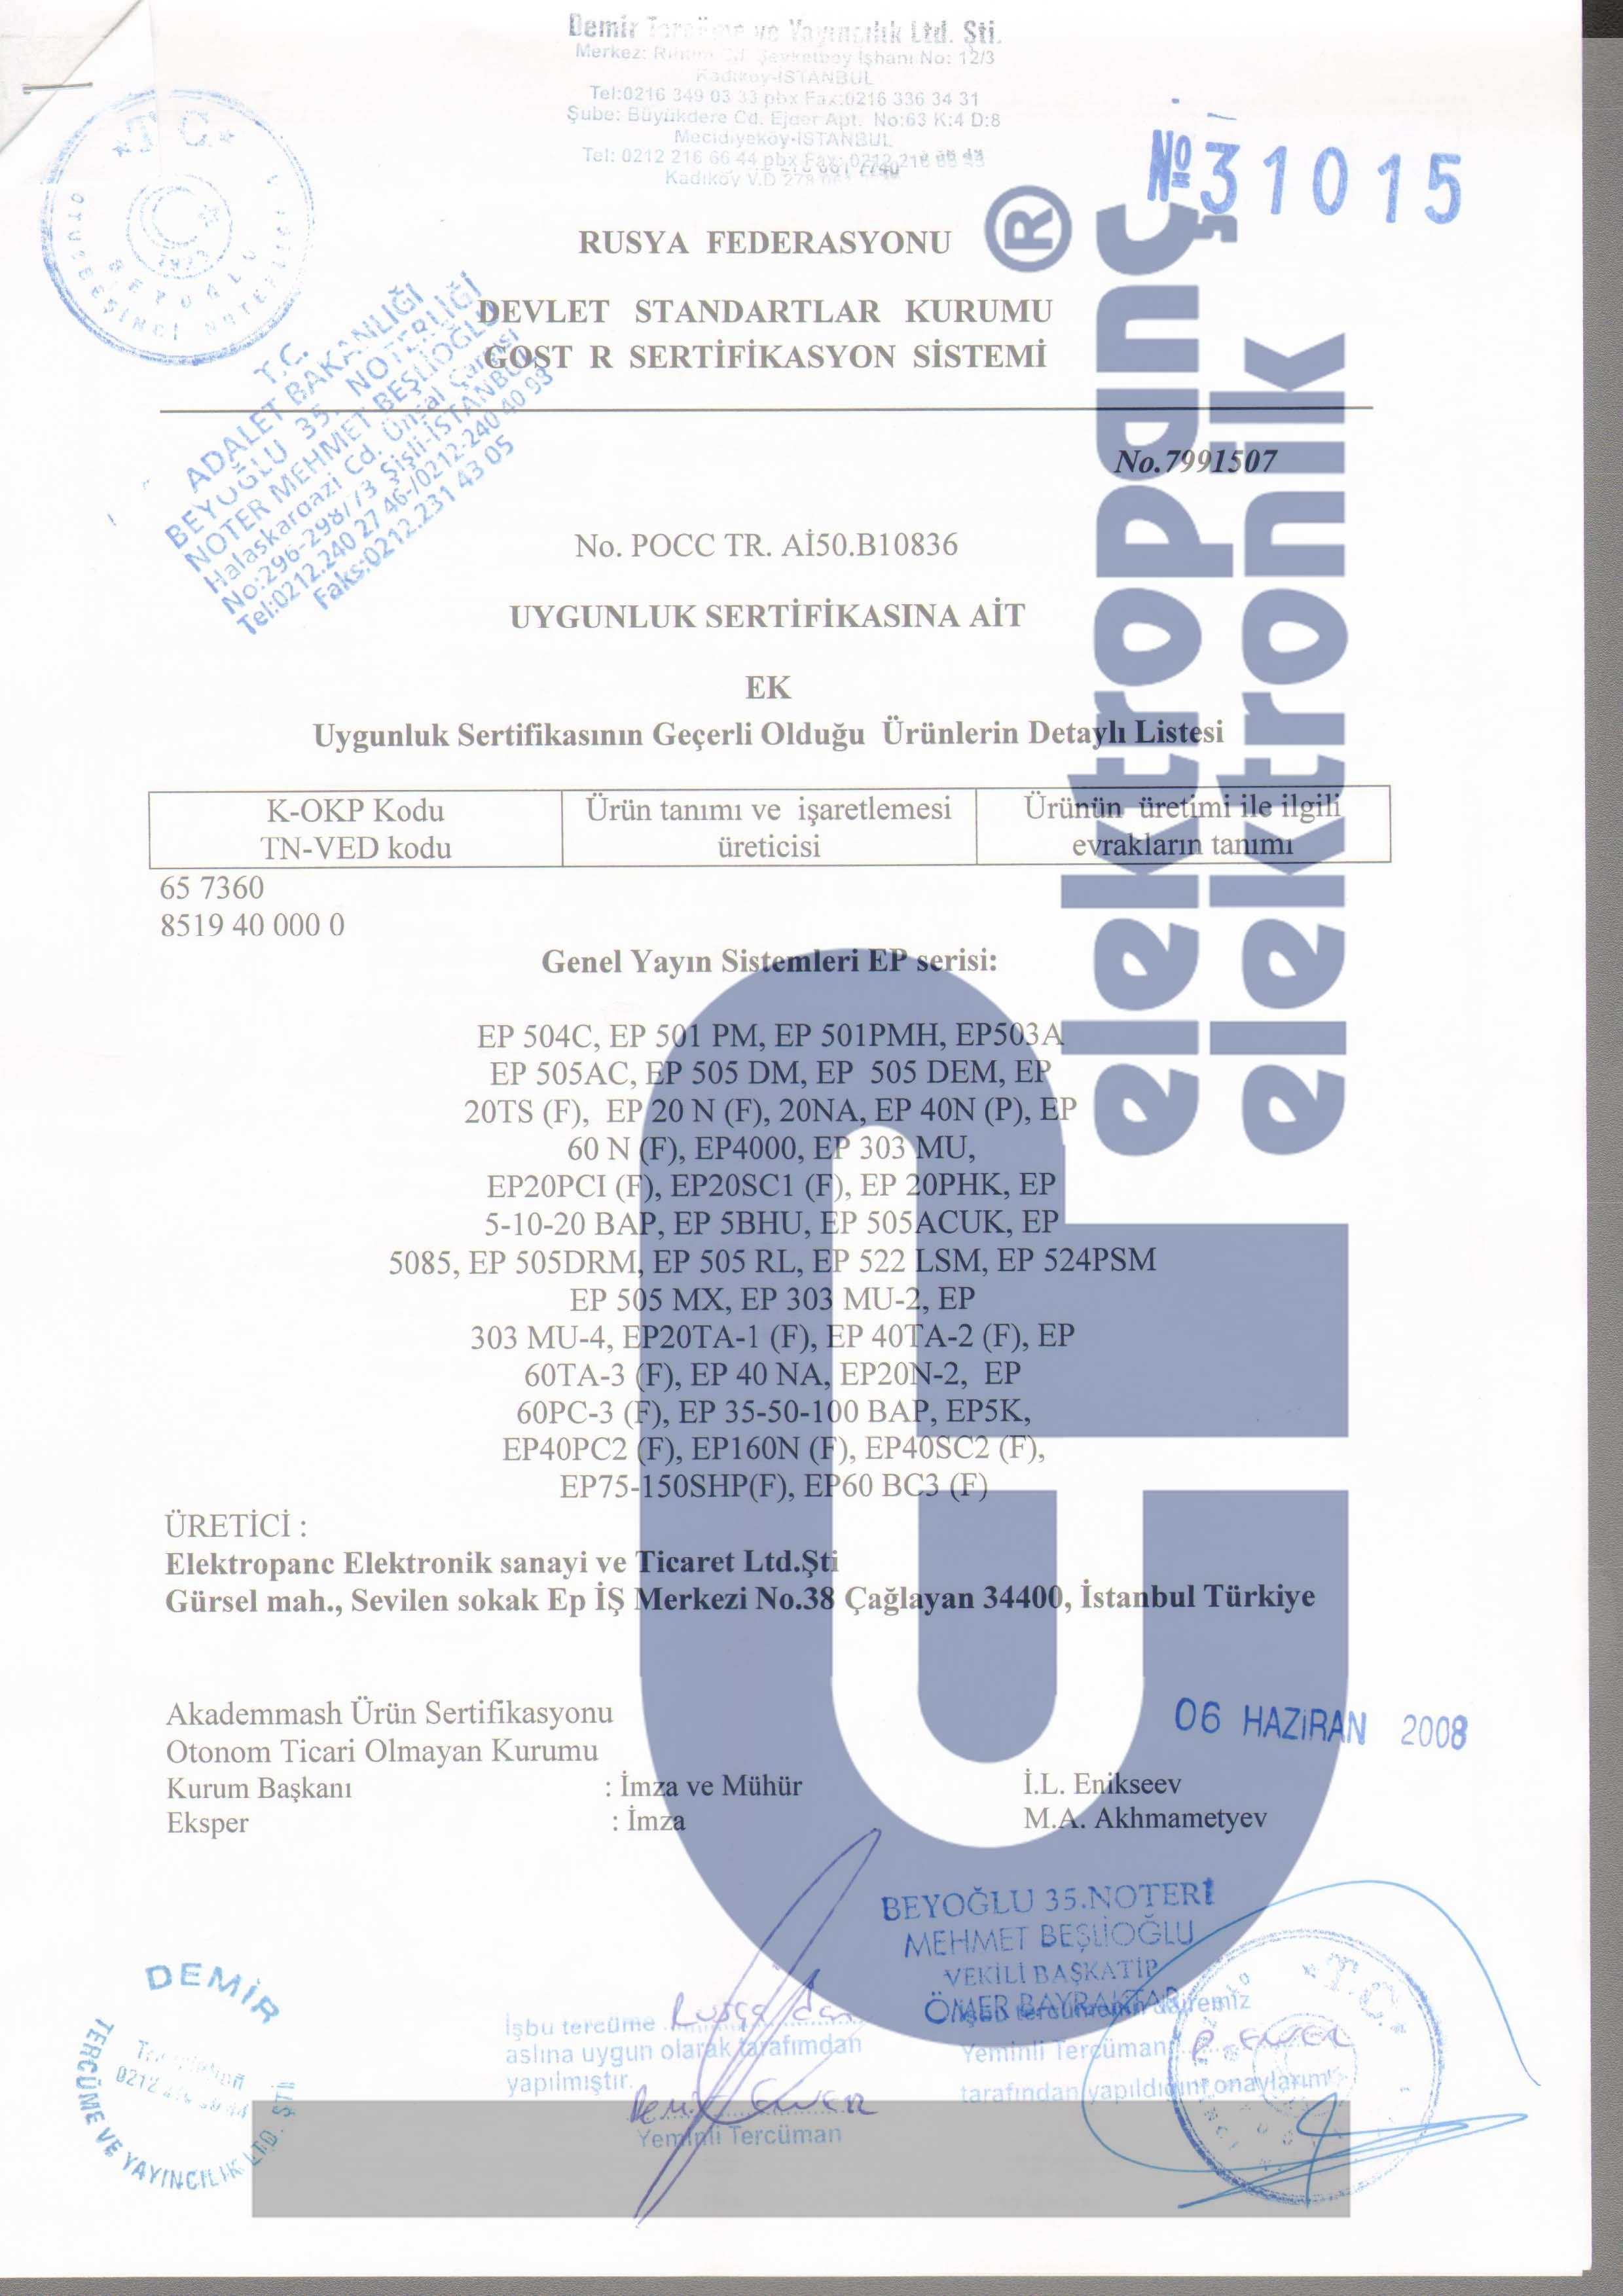 ElektropanÃ§ Certificates - Gost Certificate of Conformity - 2